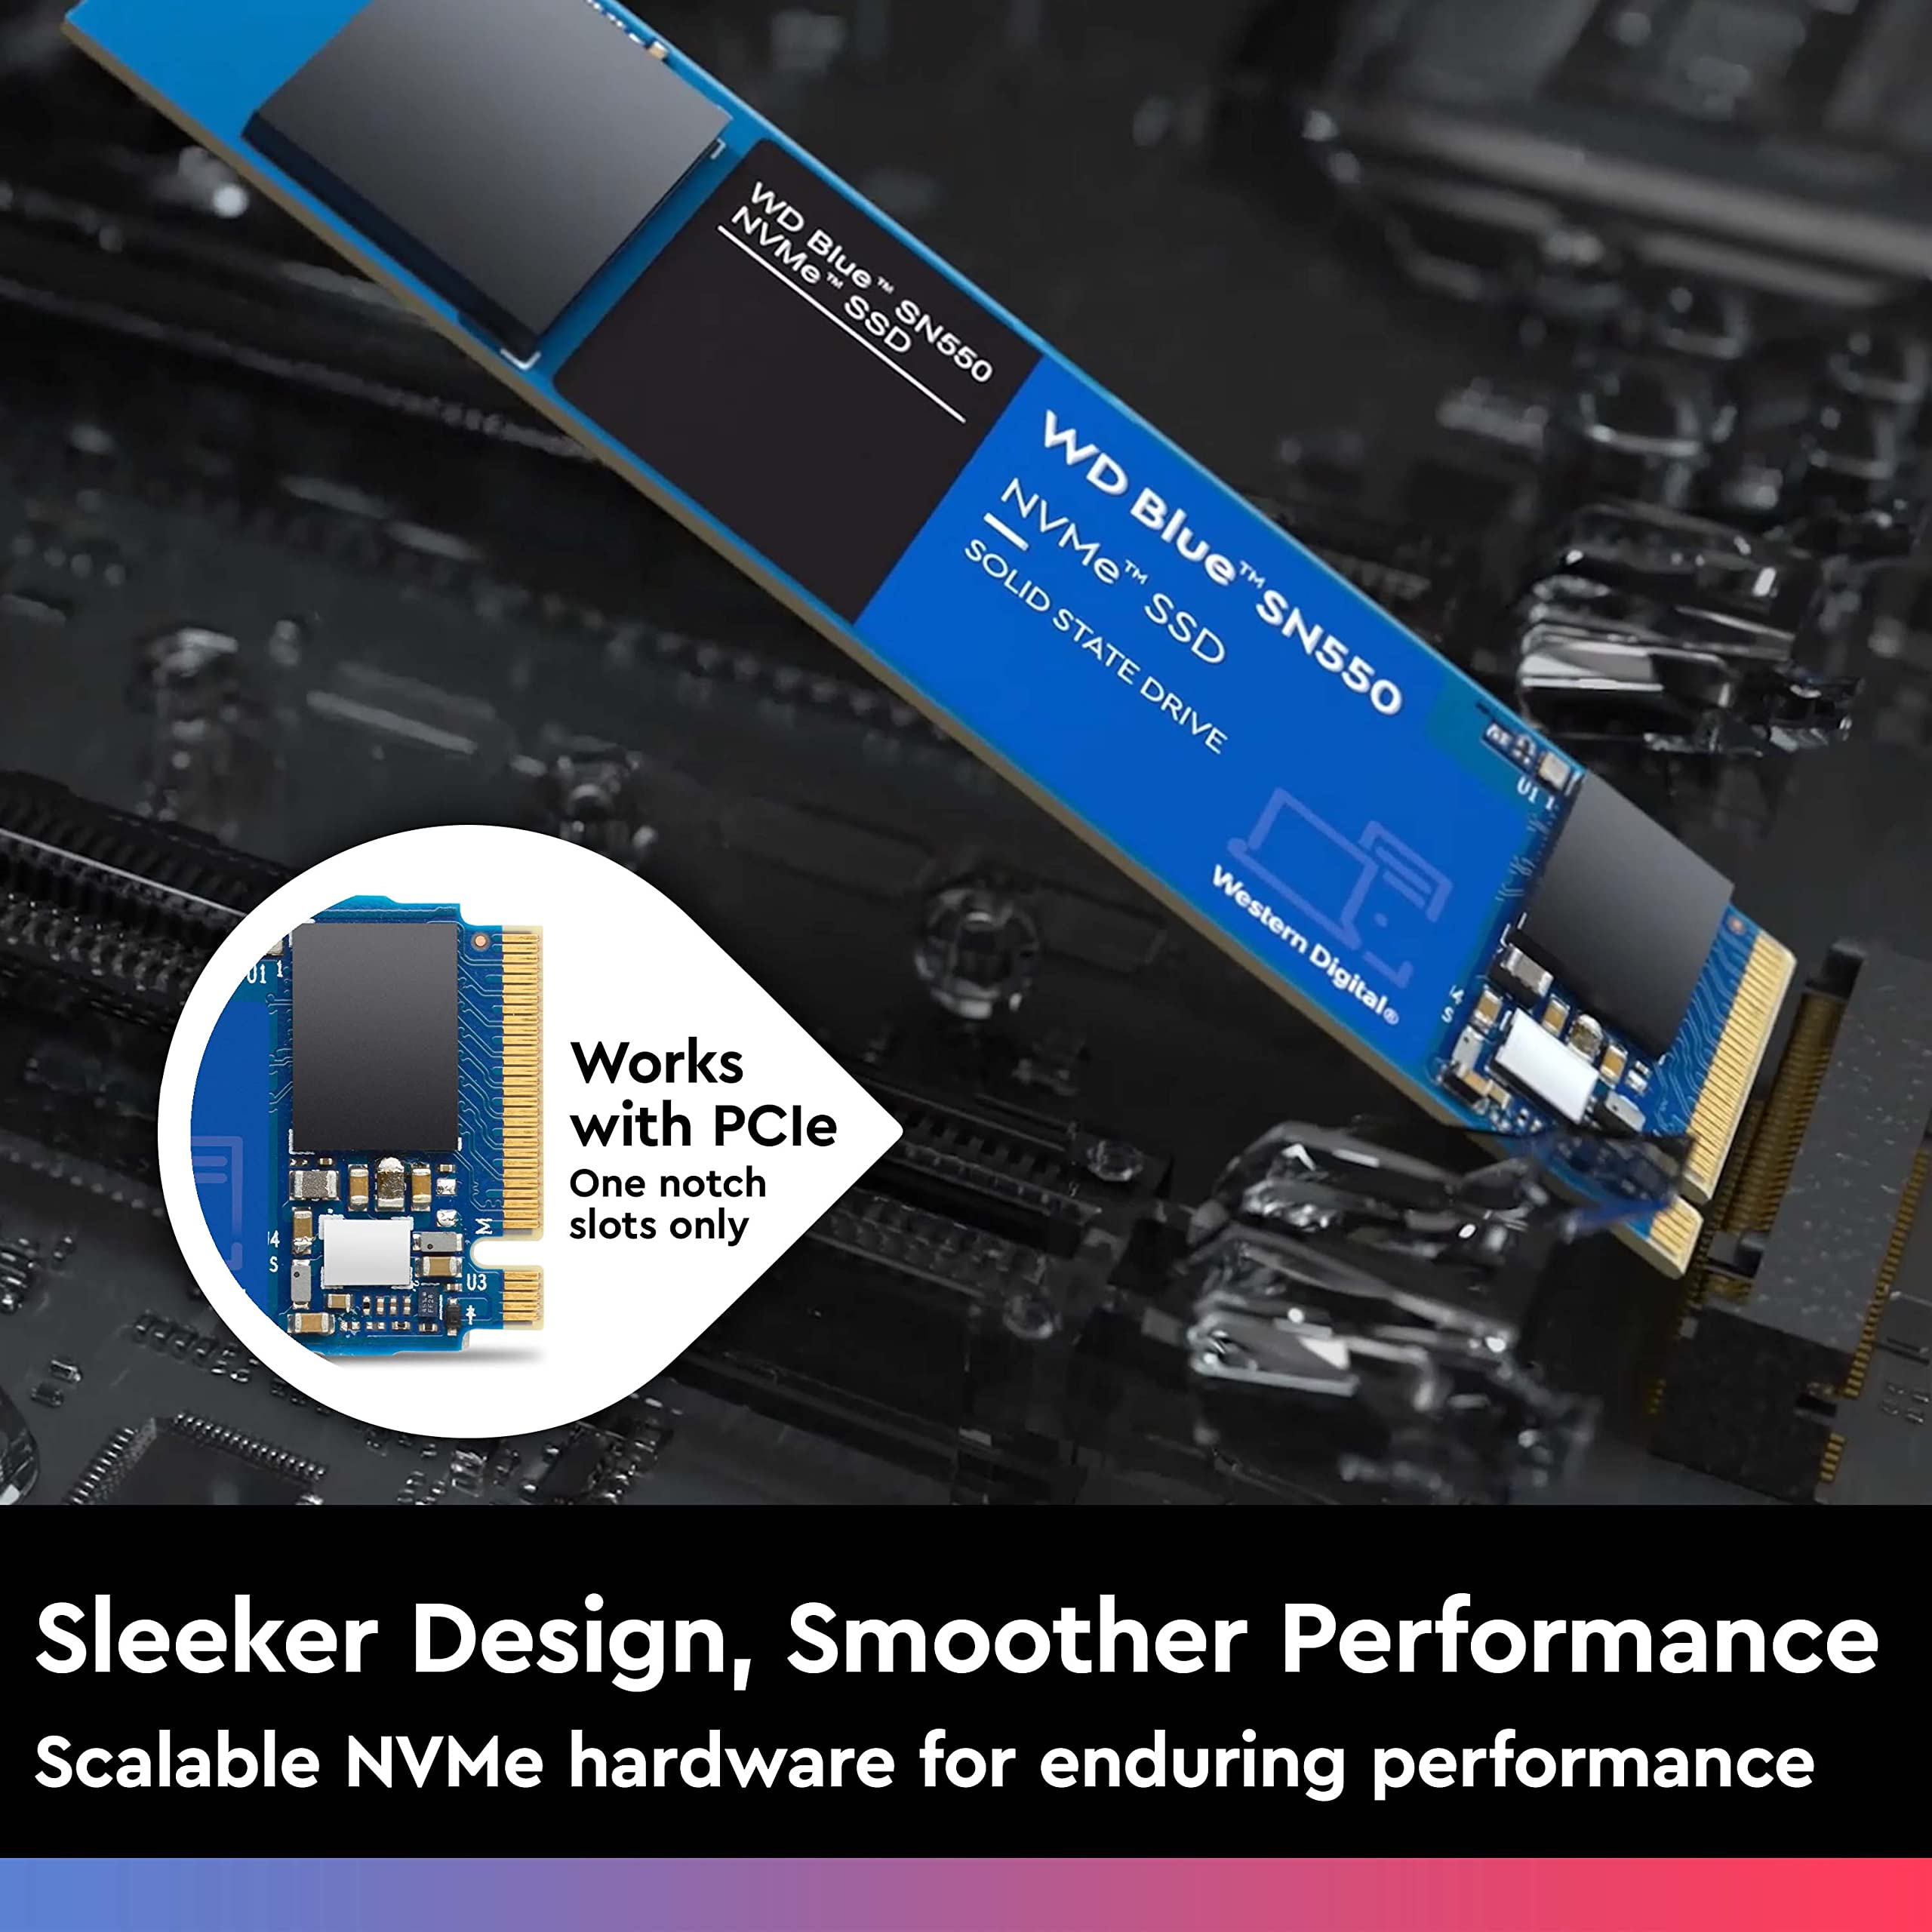 Western Digital 1TB WD Blue SN550 NVMe Internal SSD - Gen3 x4 PCIe 8Gb/s, M.2 2280, 3D NAND, Up to 2,400 MB/s - WDS100T2B0C, olid State Hard Drive